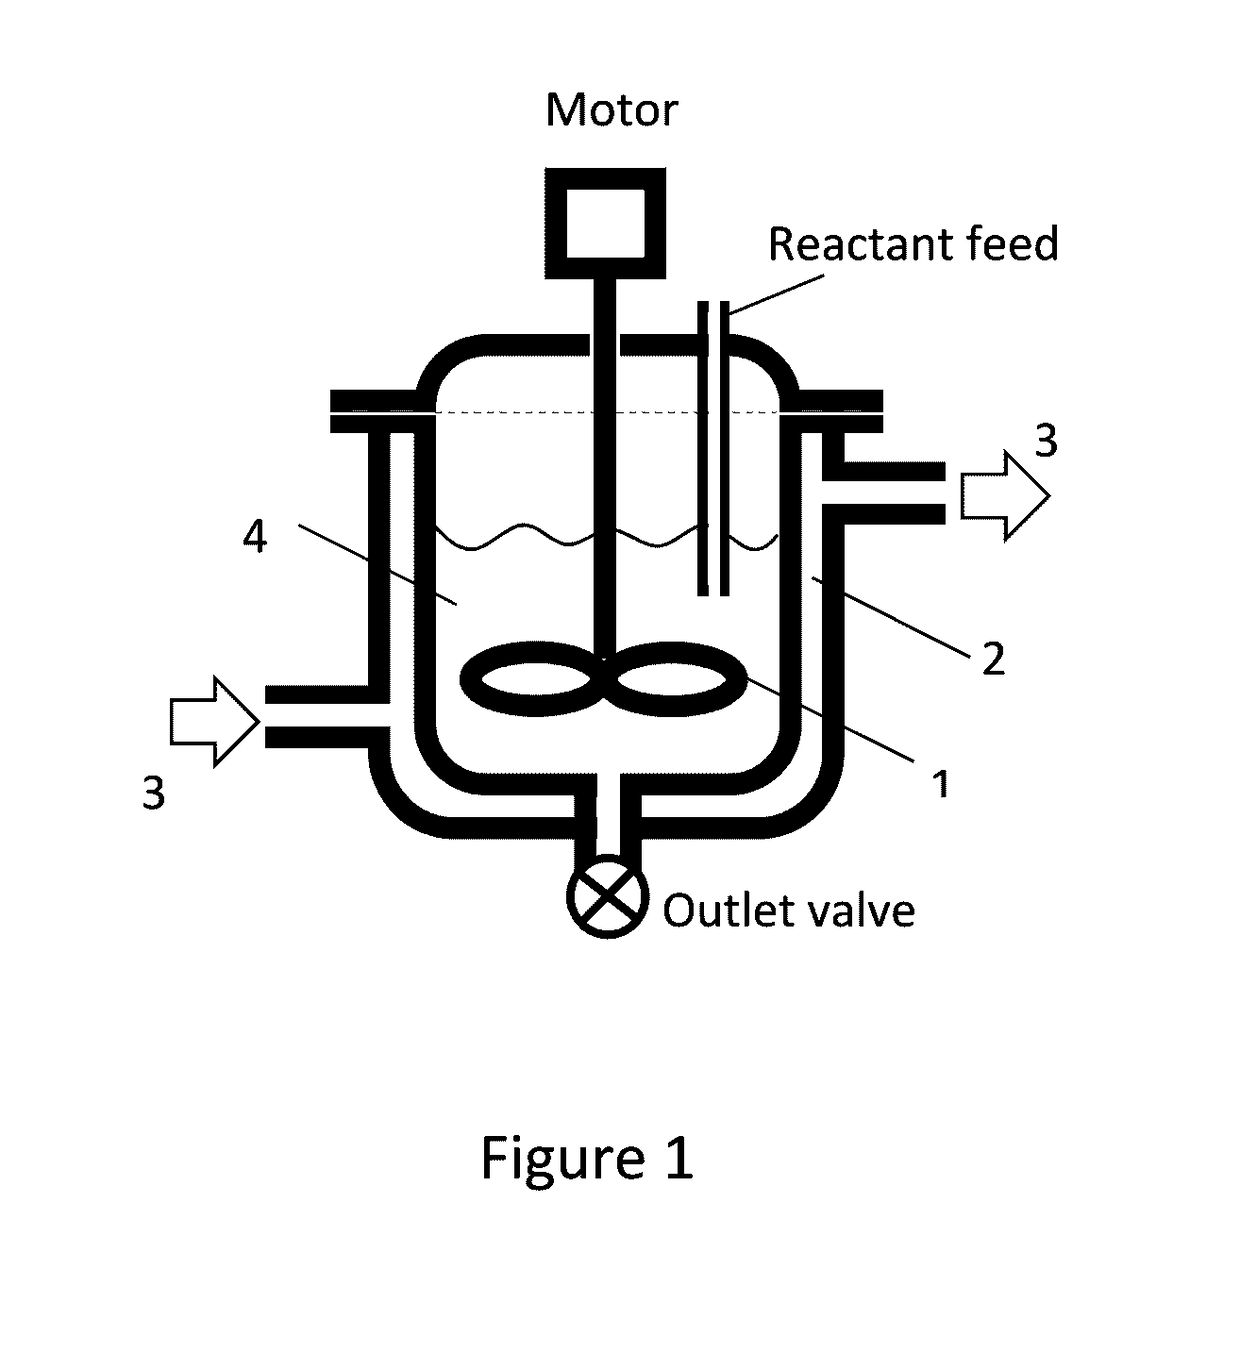 Reactor device for reaction fluid